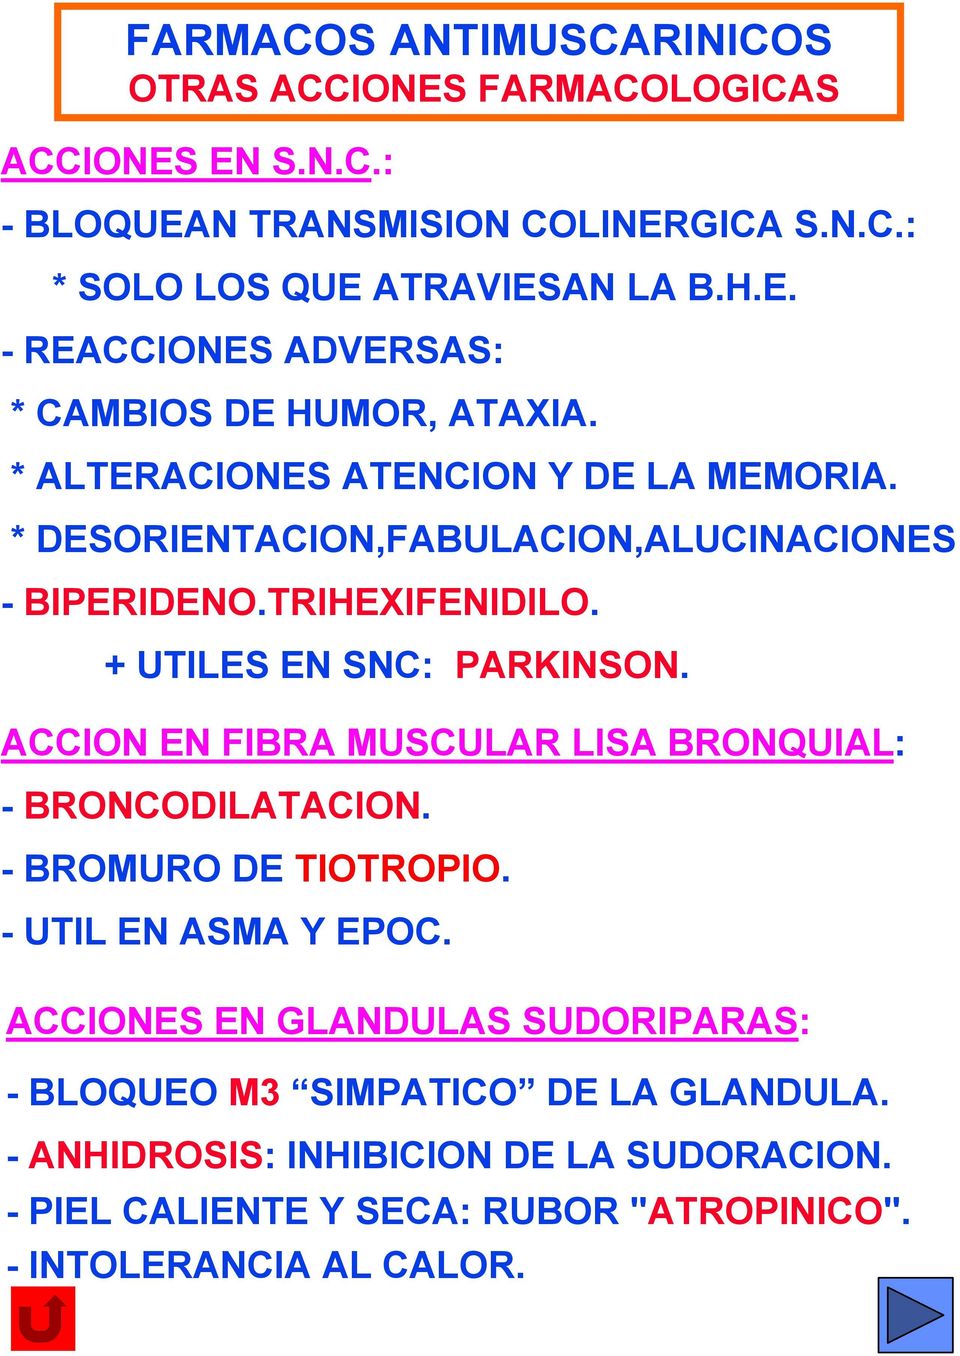 ACCION EN FIBRA MUSCULAR LISA BRONQUIAL: - BRONCODILATACION. - BROMURO DE TIOTROPIO. - UTIL EN ASMA Y EPOC.